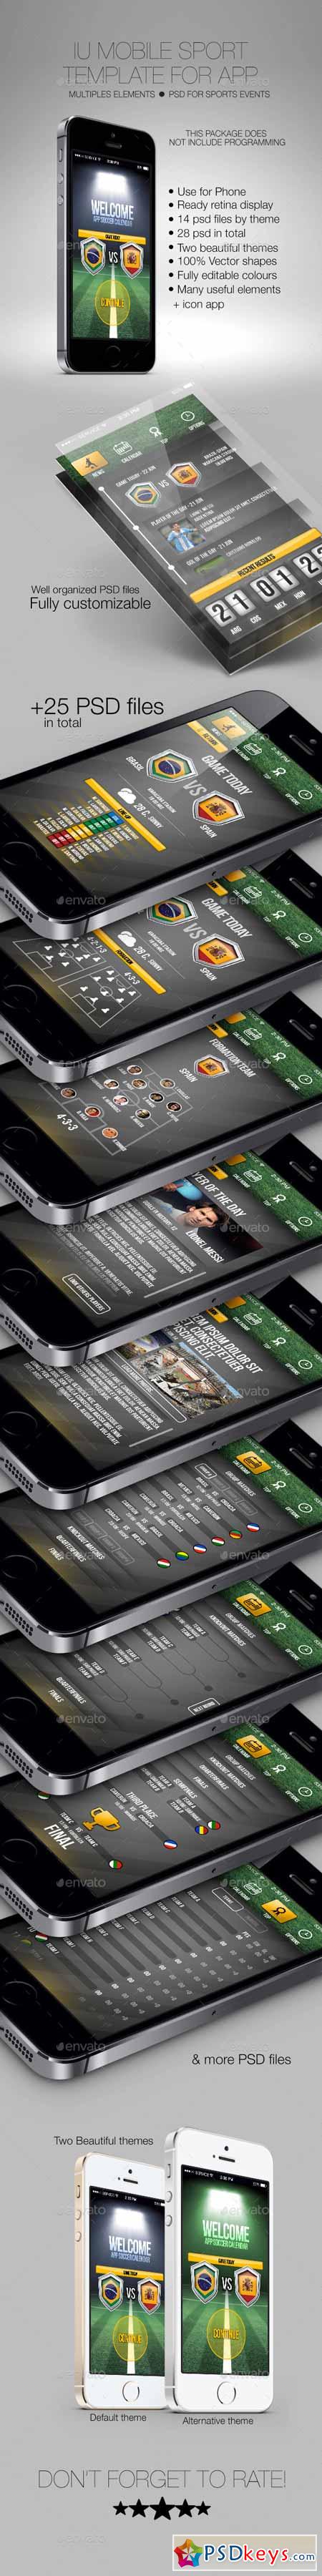 IU Mobile Sport Template for App 7119395